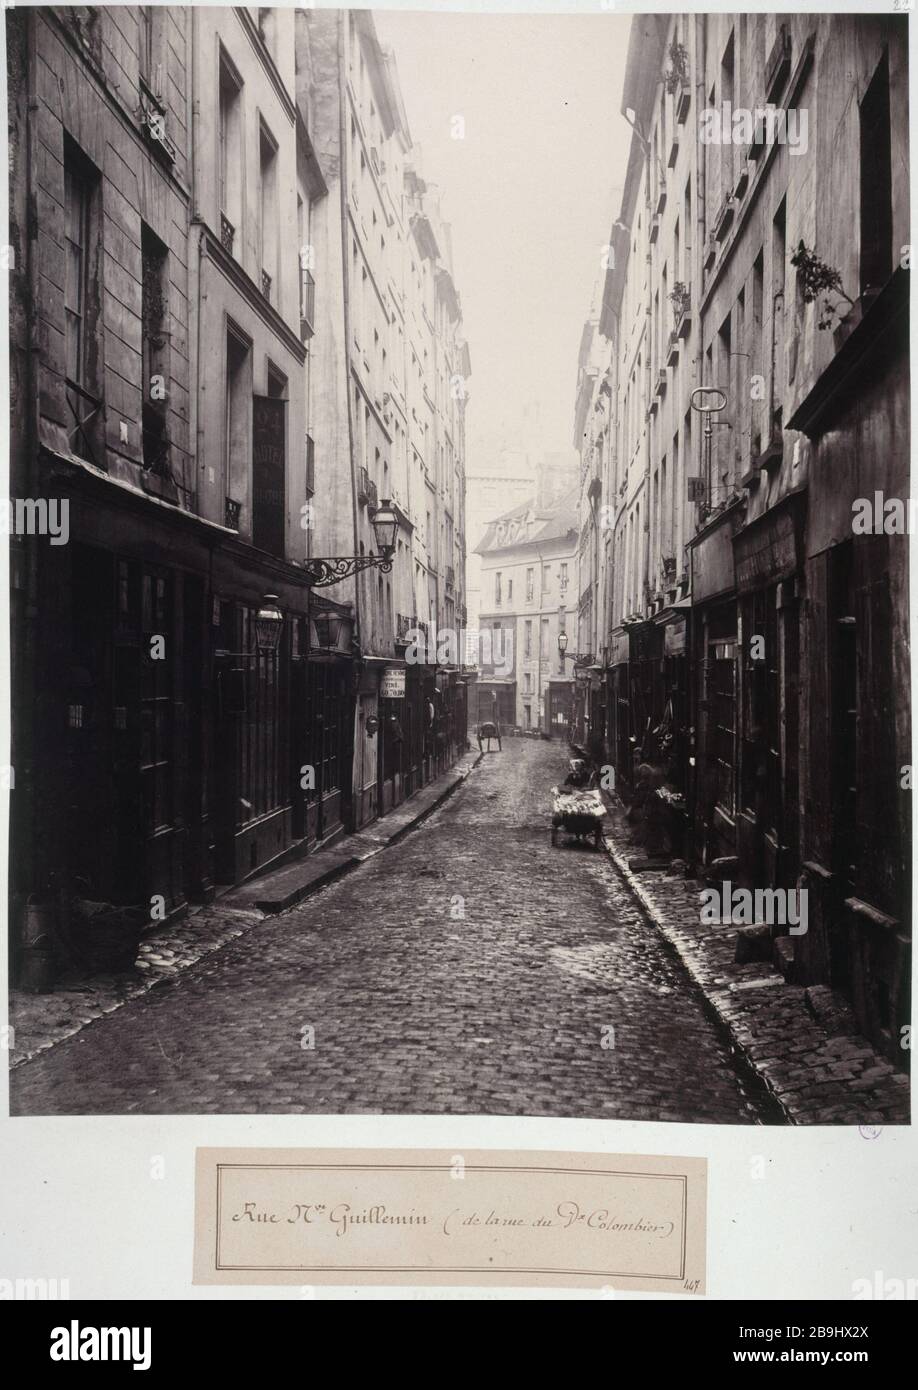 RUE NEUVE Guillemin (STRASSE OLD COLOMBIER) 'Rue Neuve Guillemin (de la rue du Vieux Colombier)', VIème arr.. Photographie de Charles Marville (13-1879). Paris, musée Carnavalet. Stockfoto